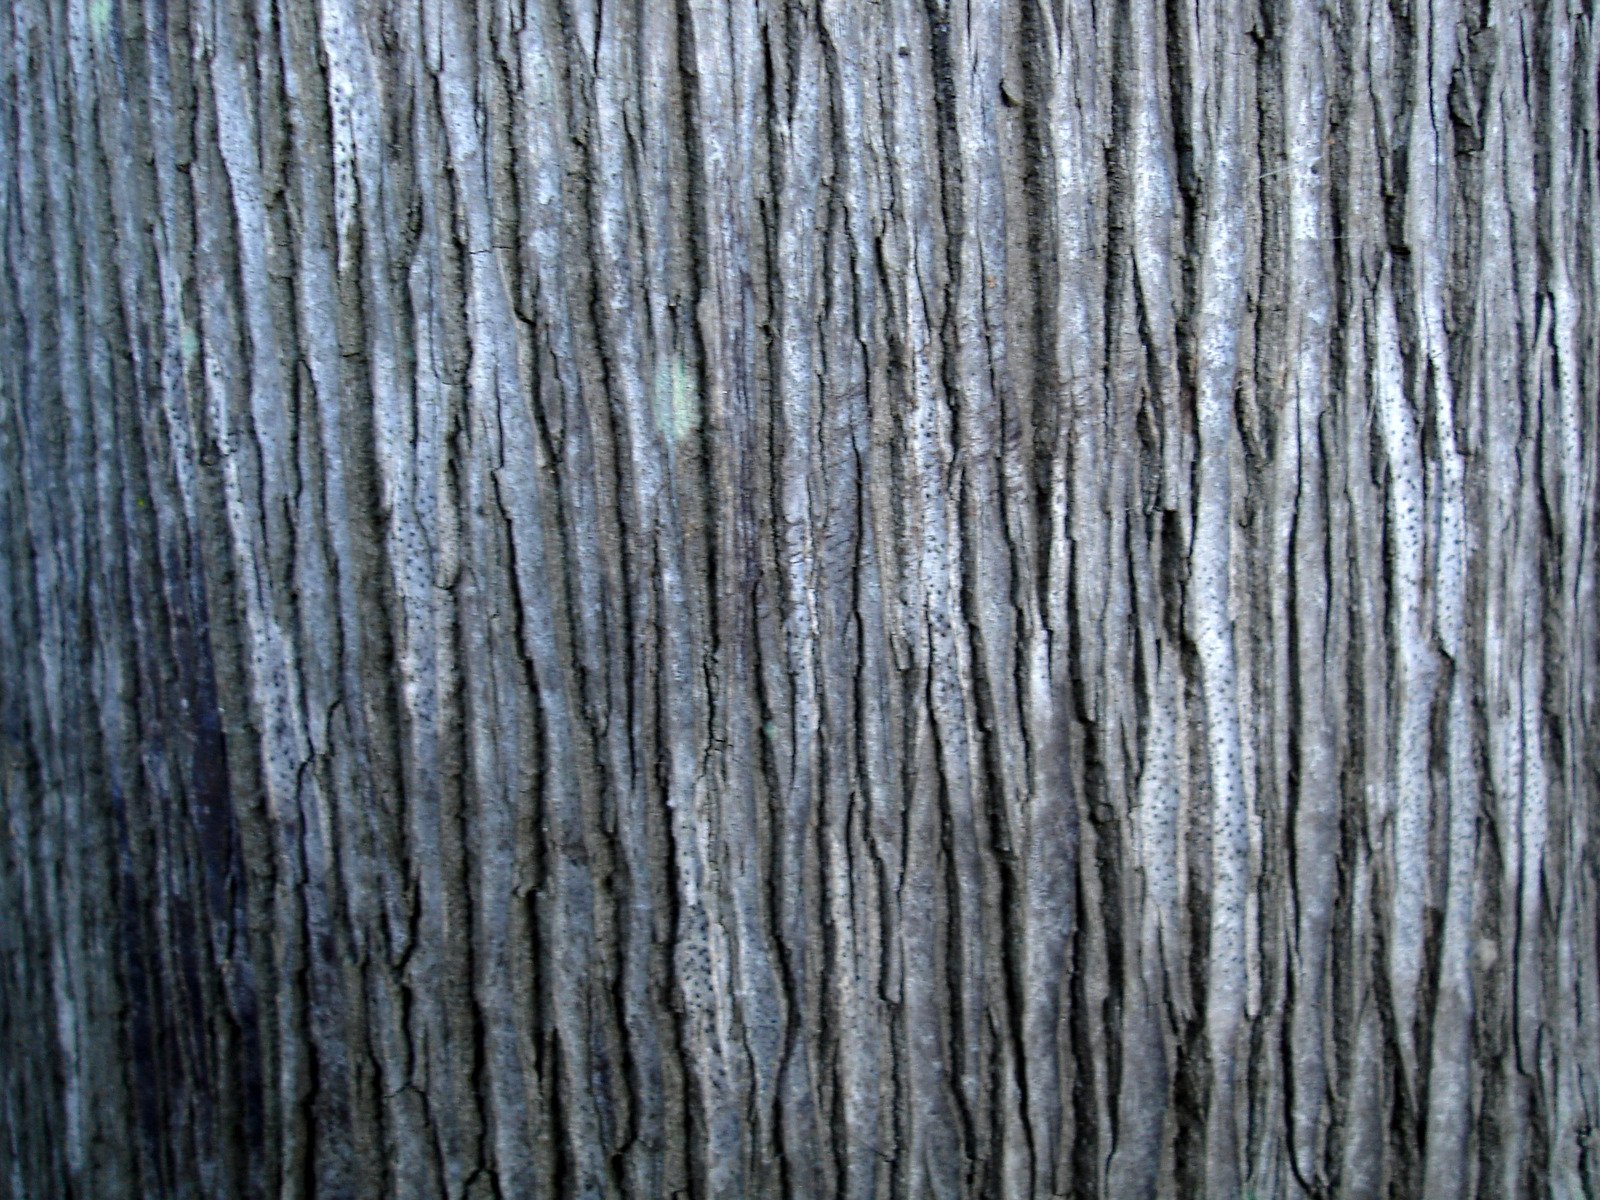 the bark of a tree has very thin lines